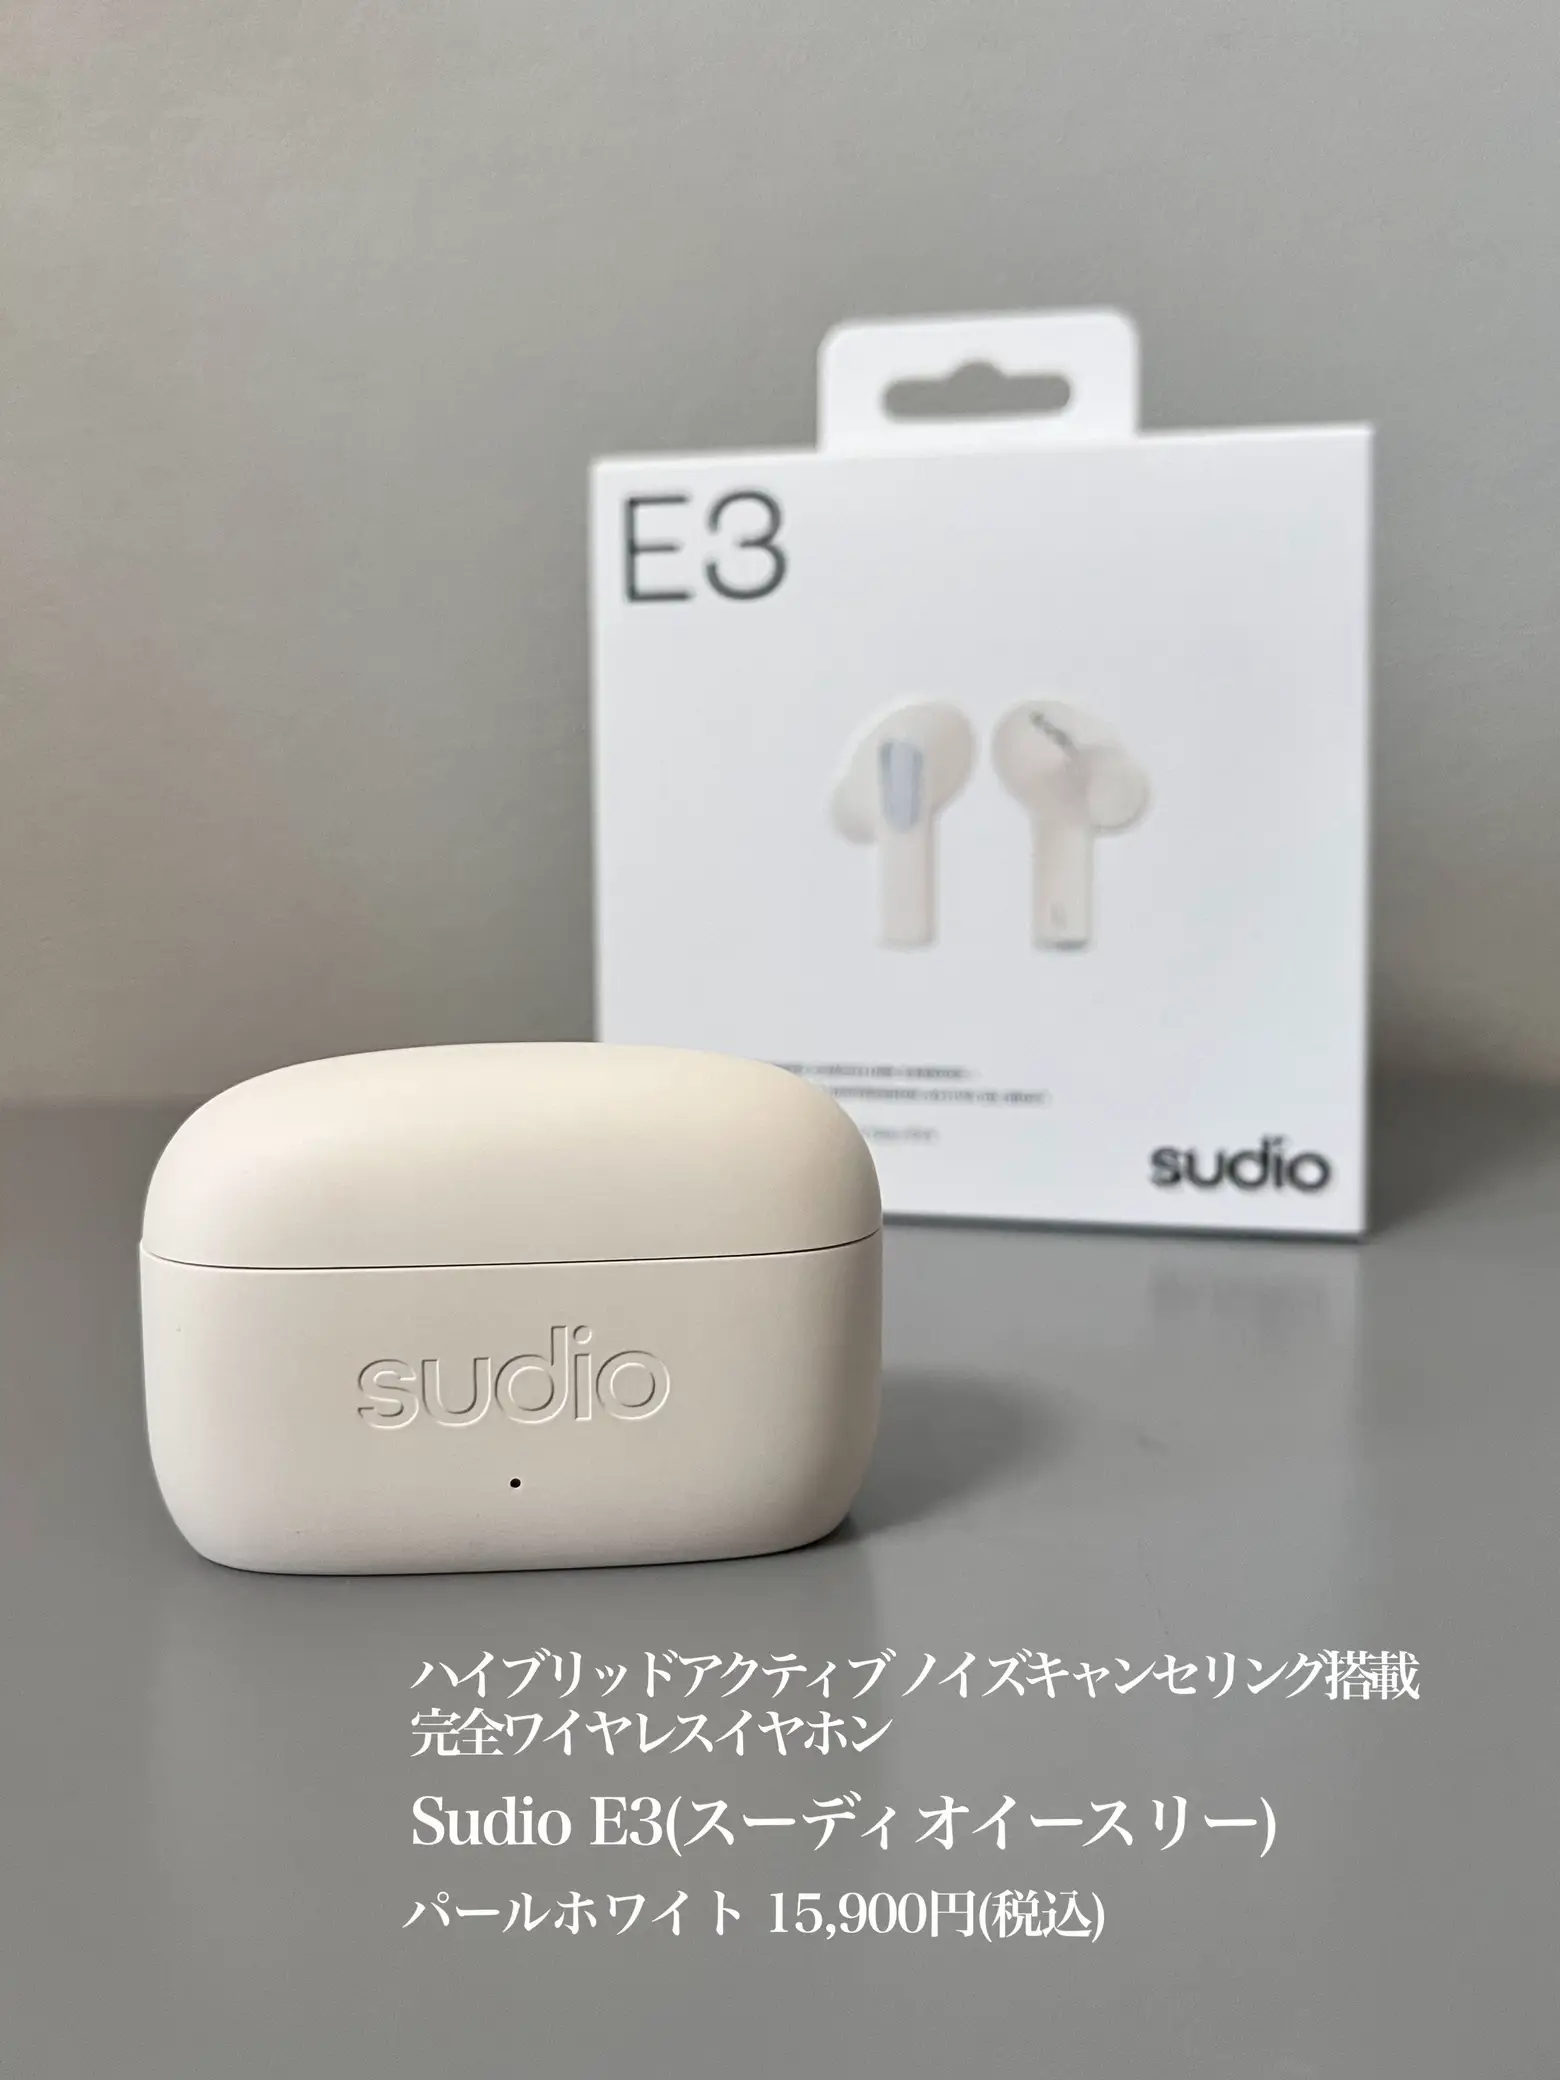 Sudio E3 ハイブリッドアクティブノイズキャンセリングイヤホン - イヤホン